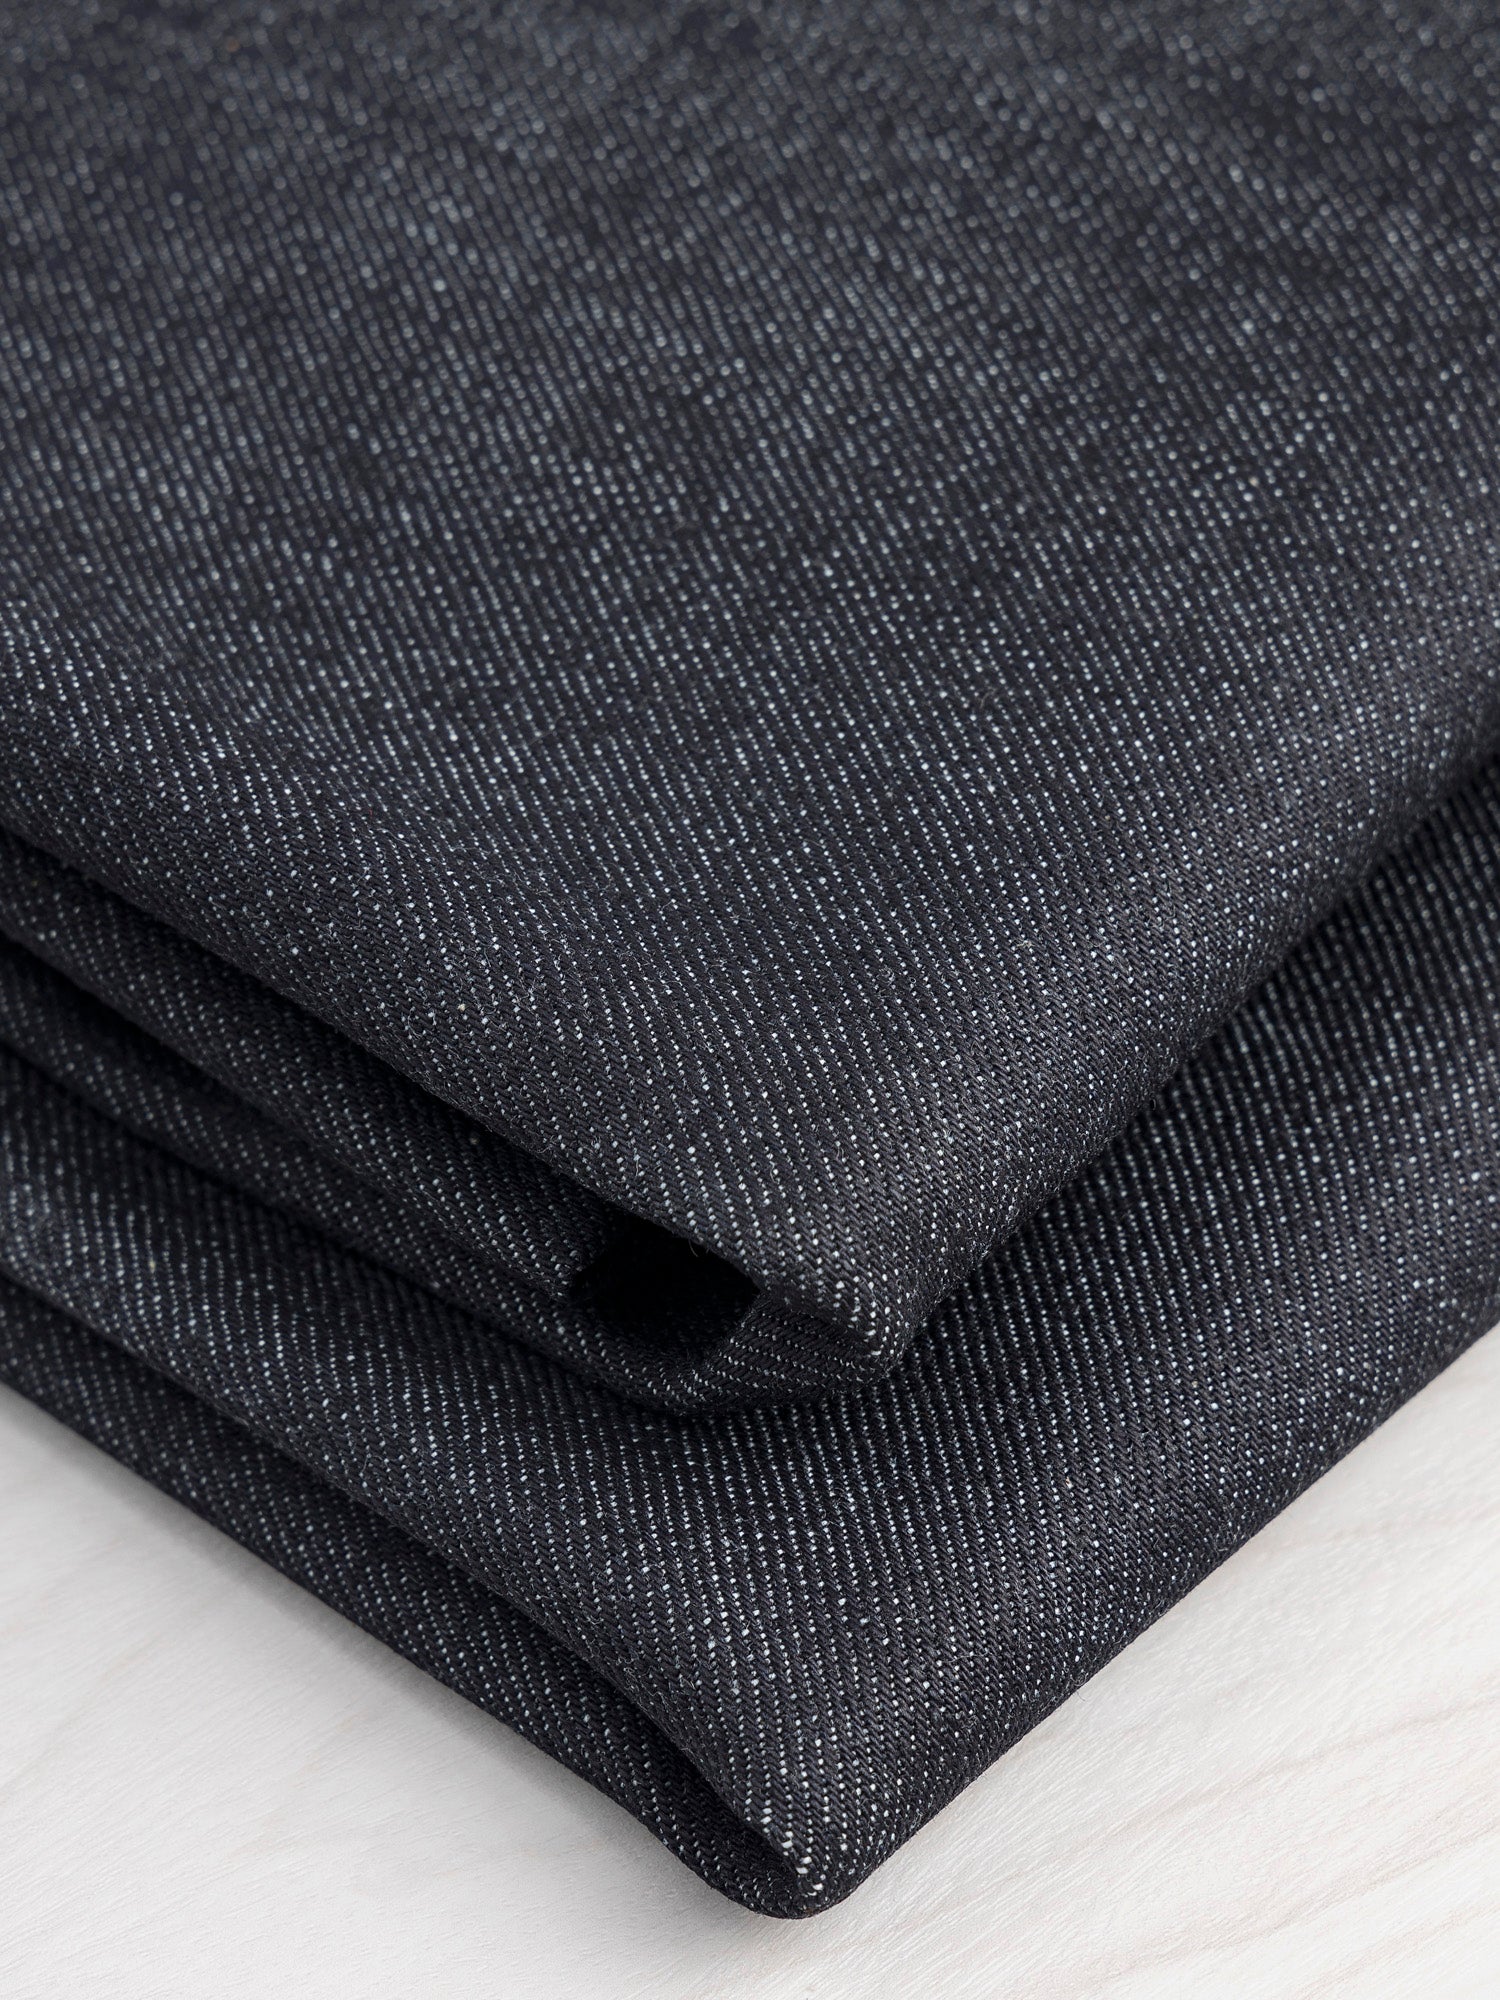 14 oz Japanese Selvedge Non-Stretch Denim Deadstock - Indigo | Core Fabrics